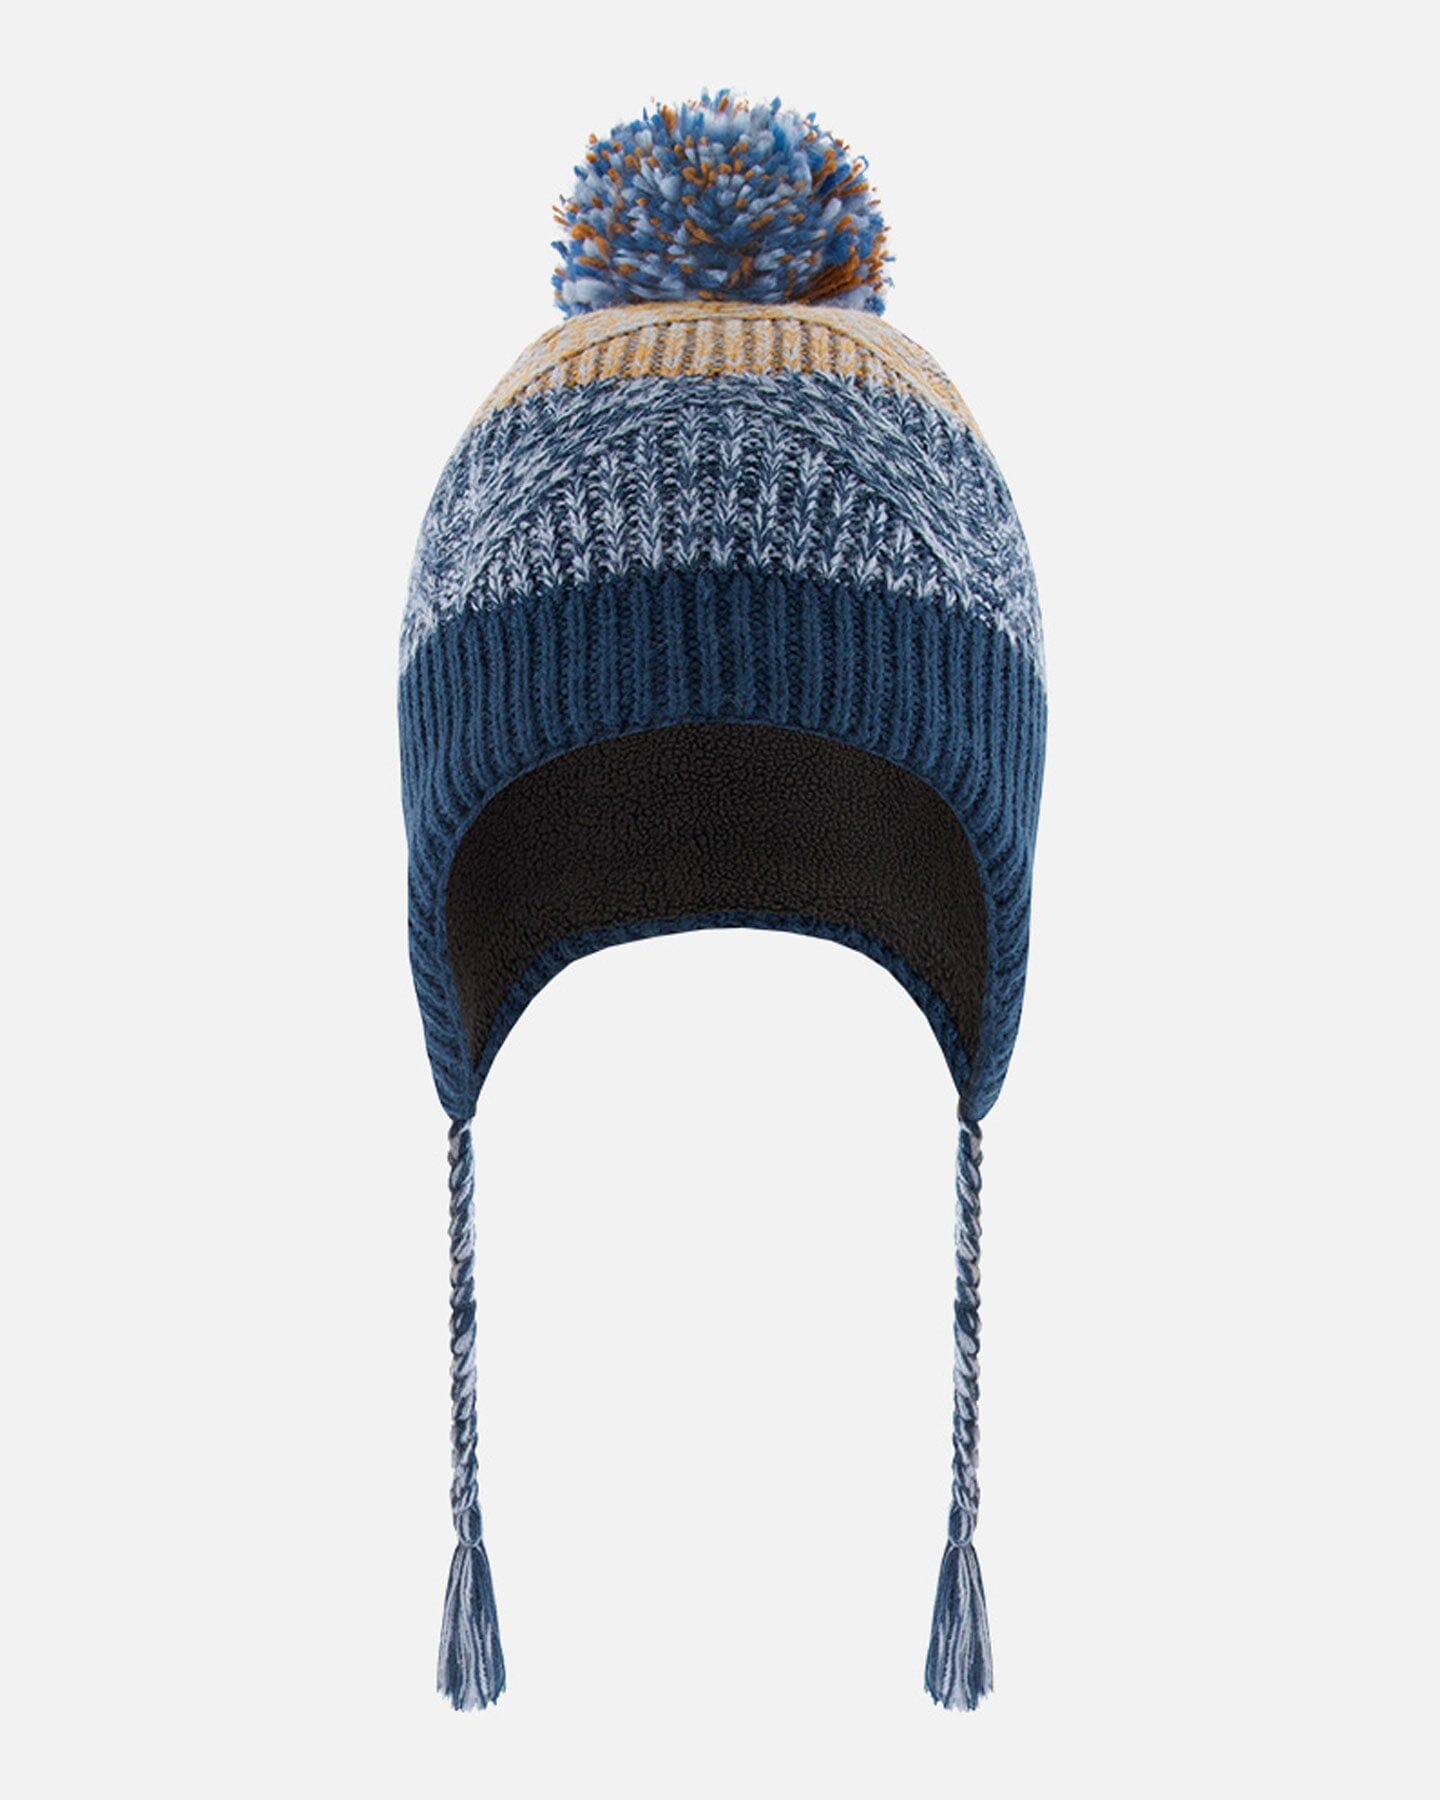 Peruanischer gestreifter Hut, blaugrün, Farbblock, Winter-Accessoires Deux par Deux 